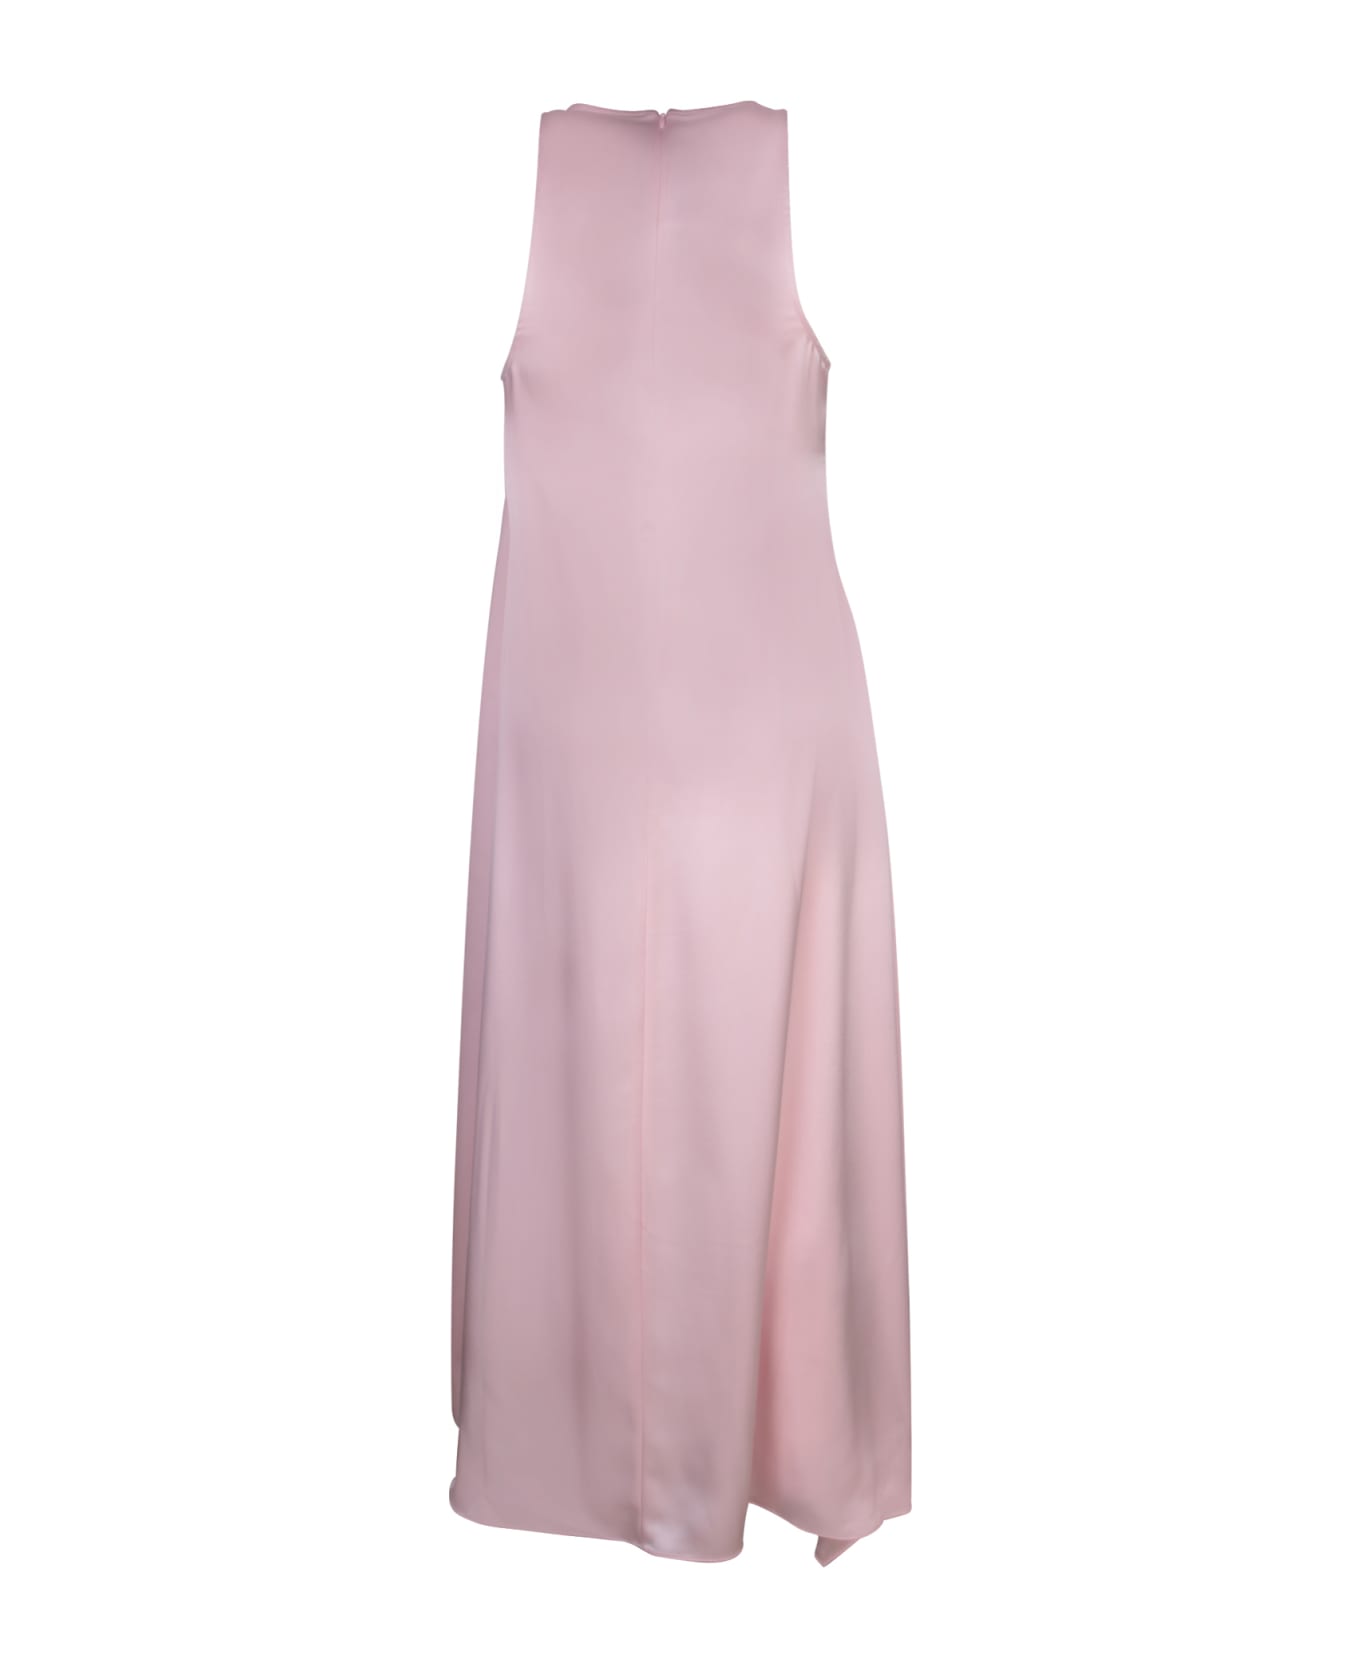 J.W. Anderson Light Pink Satin Dress - PINK